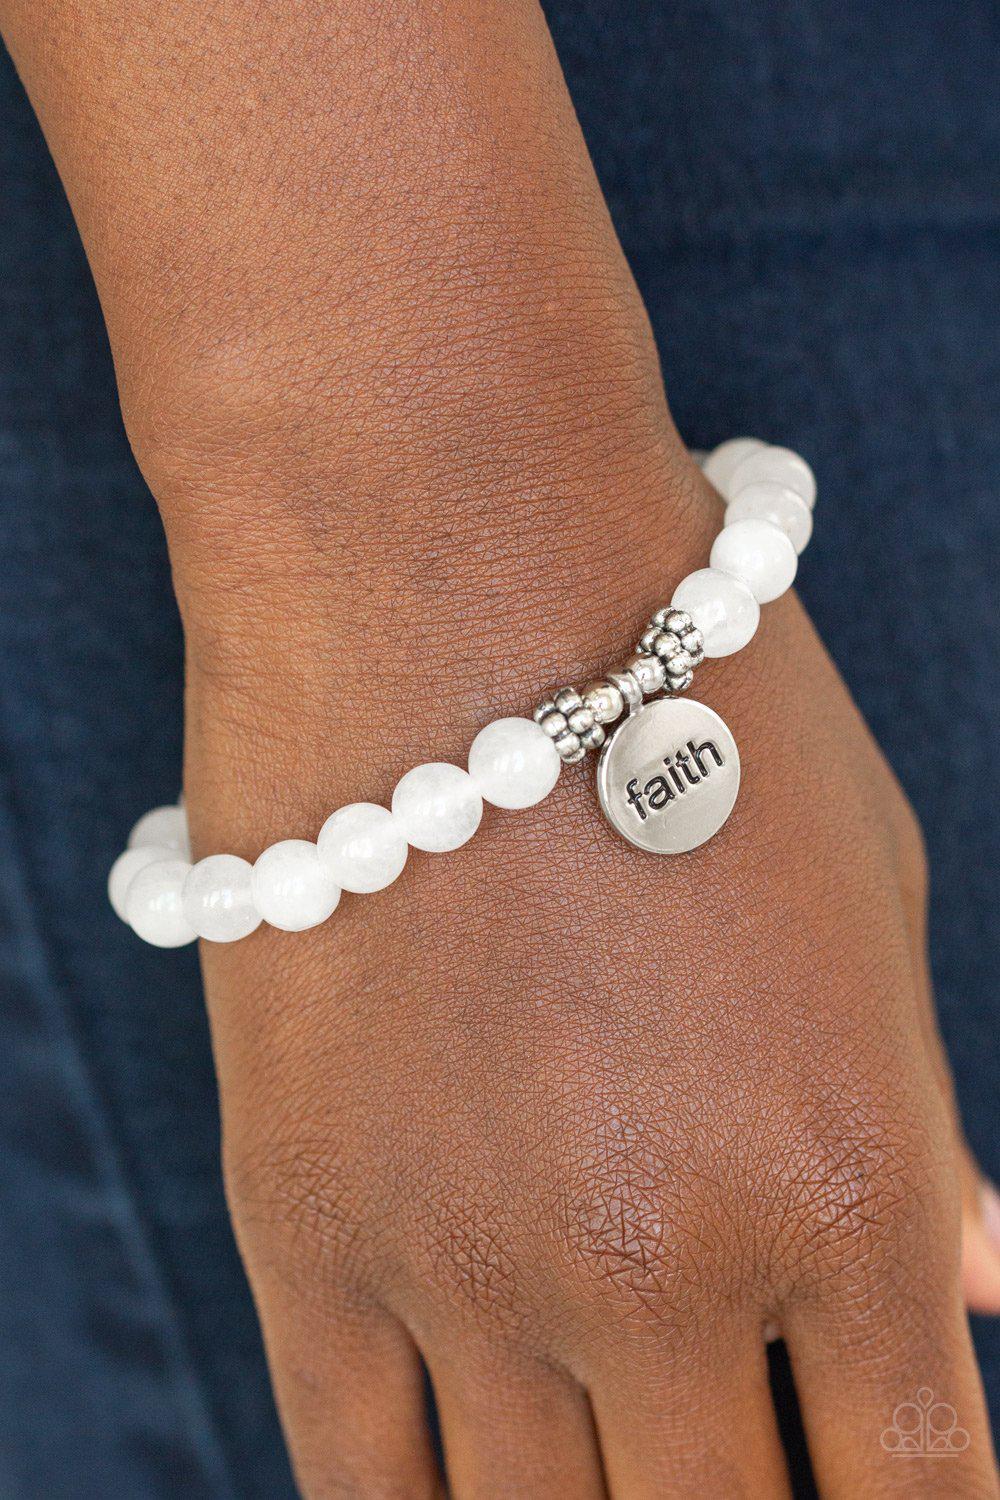 FAITH It, Till You Make It White Stone Stretch Bracelet - Paparazzi Accessories-CarasShop.com - $5 Jewelry by Cara Jewels